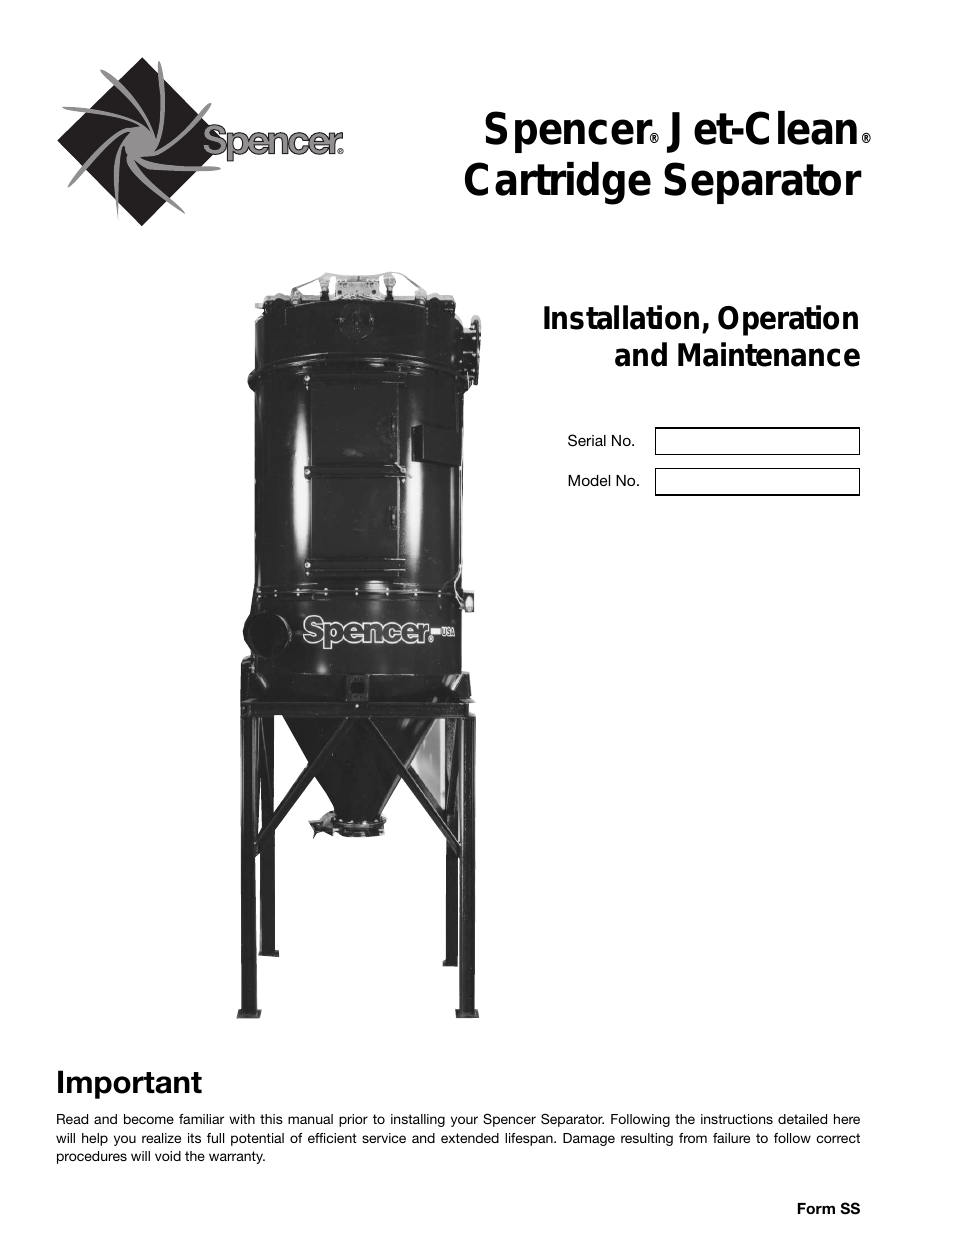 Jet-Clean Cartridge Separator